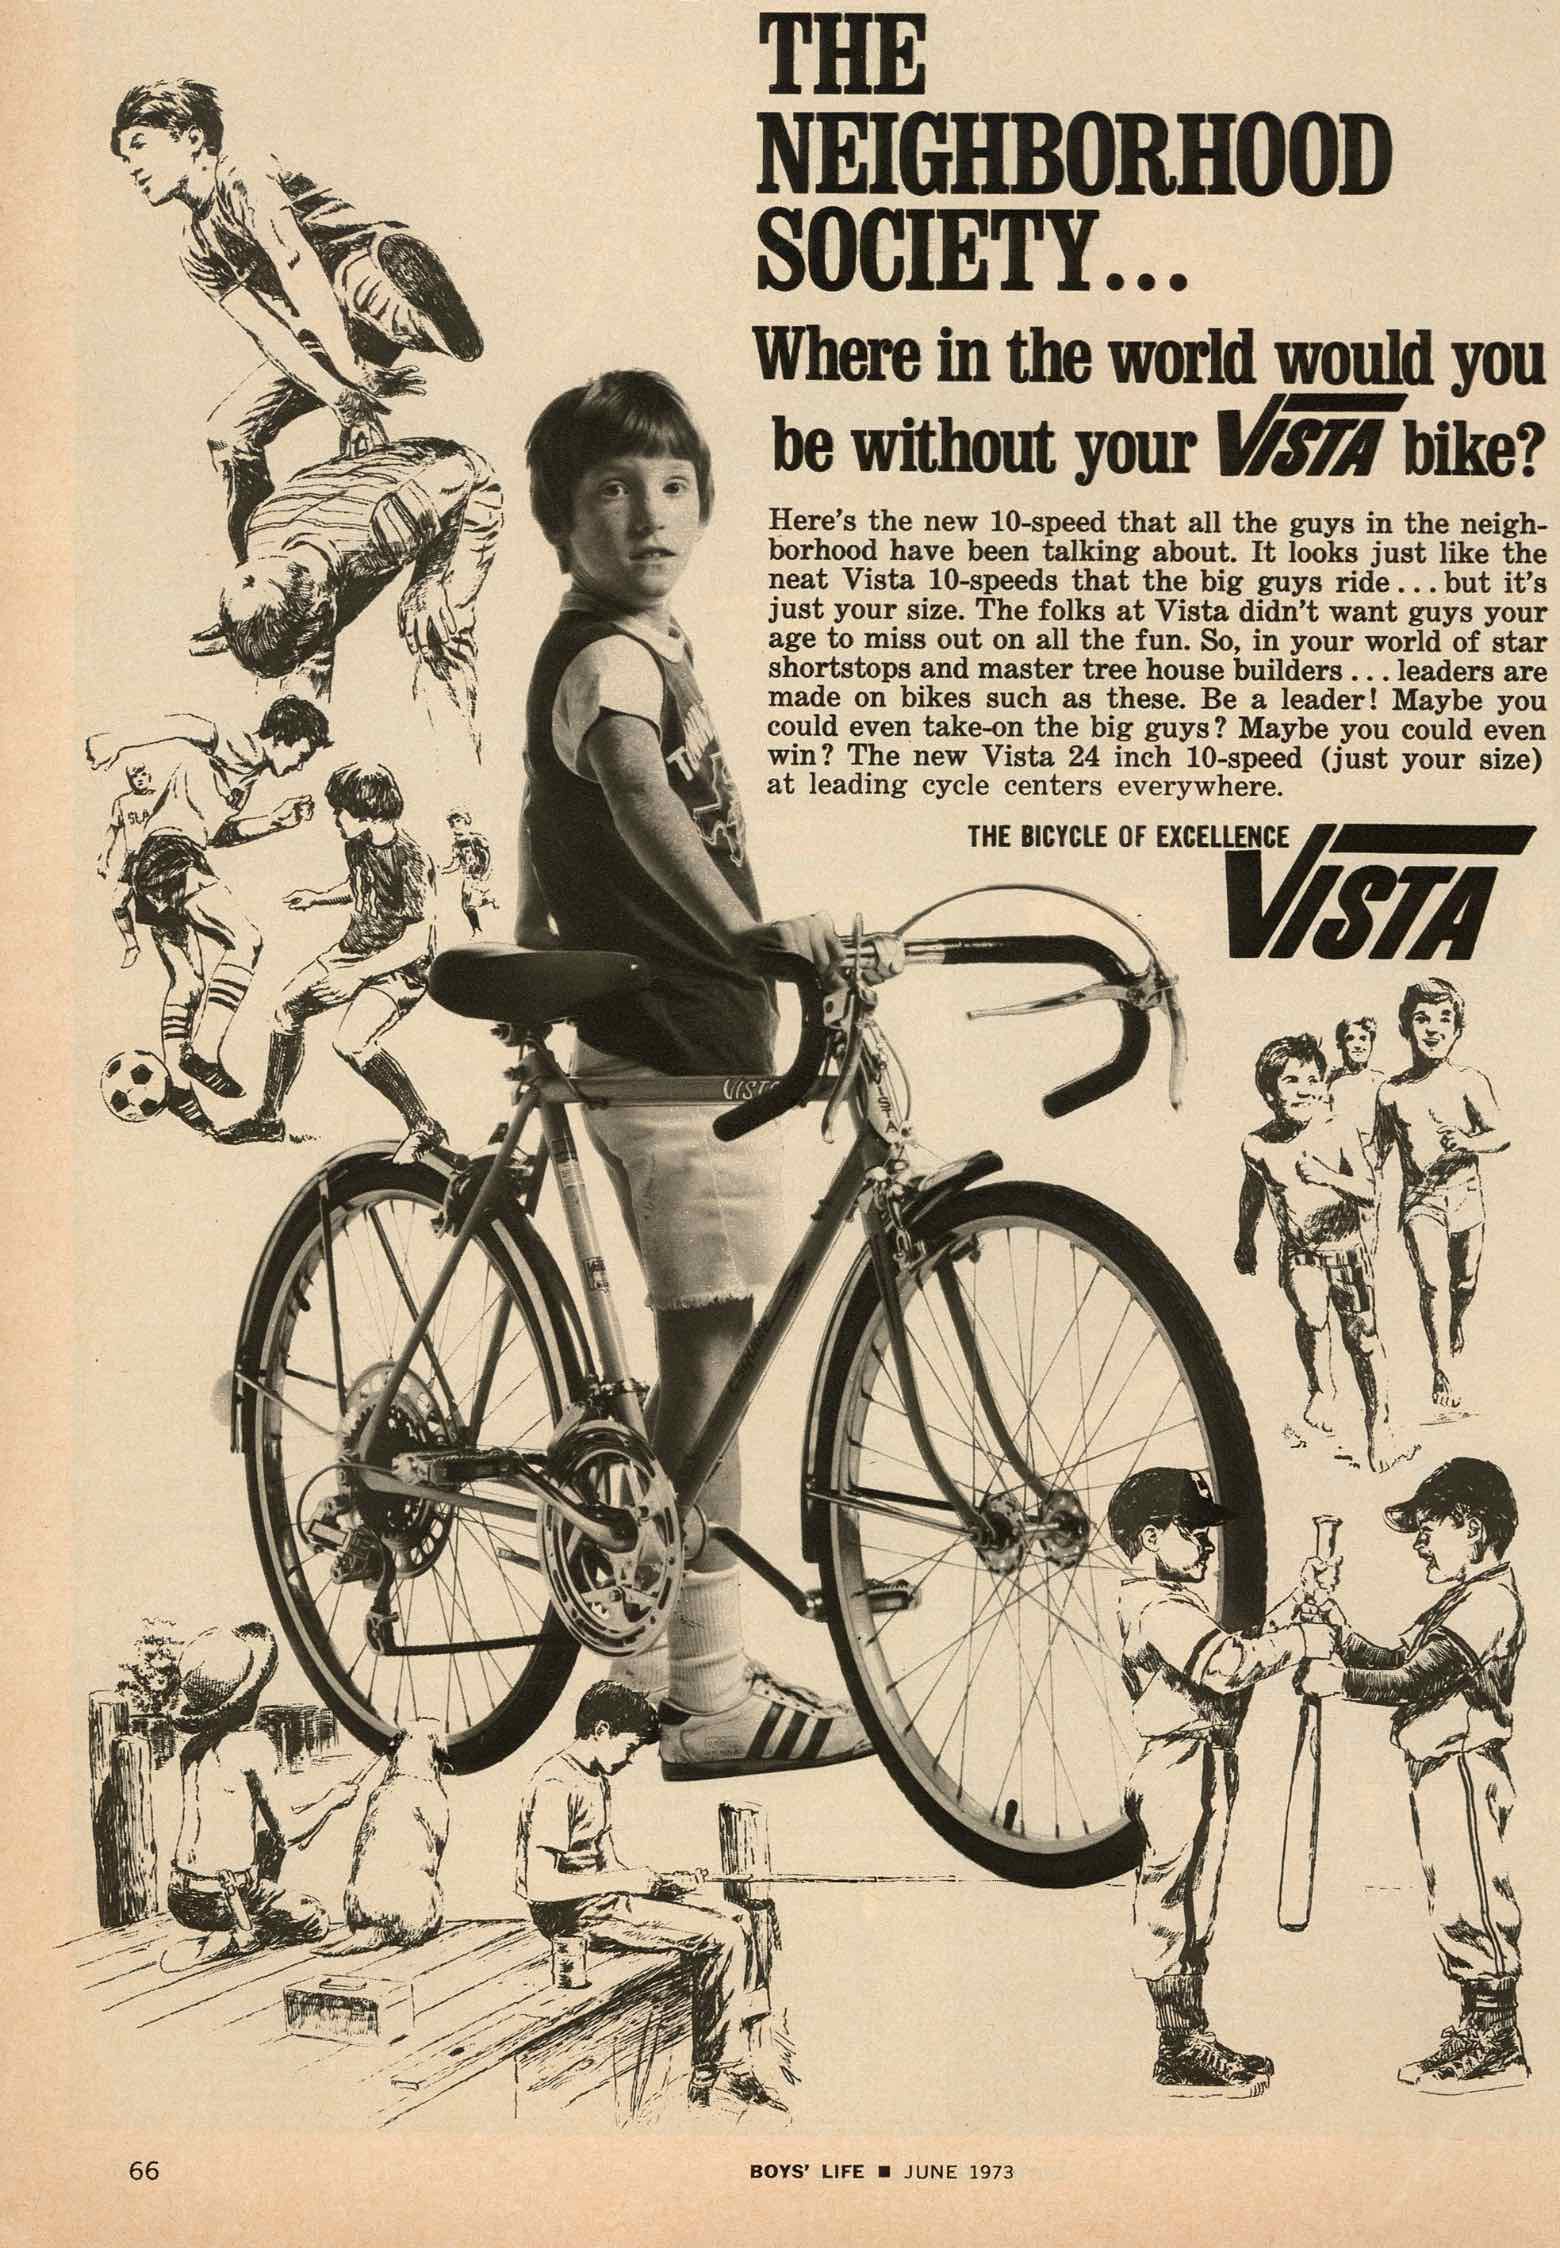 Boys Life 1973 - Vista advert main image